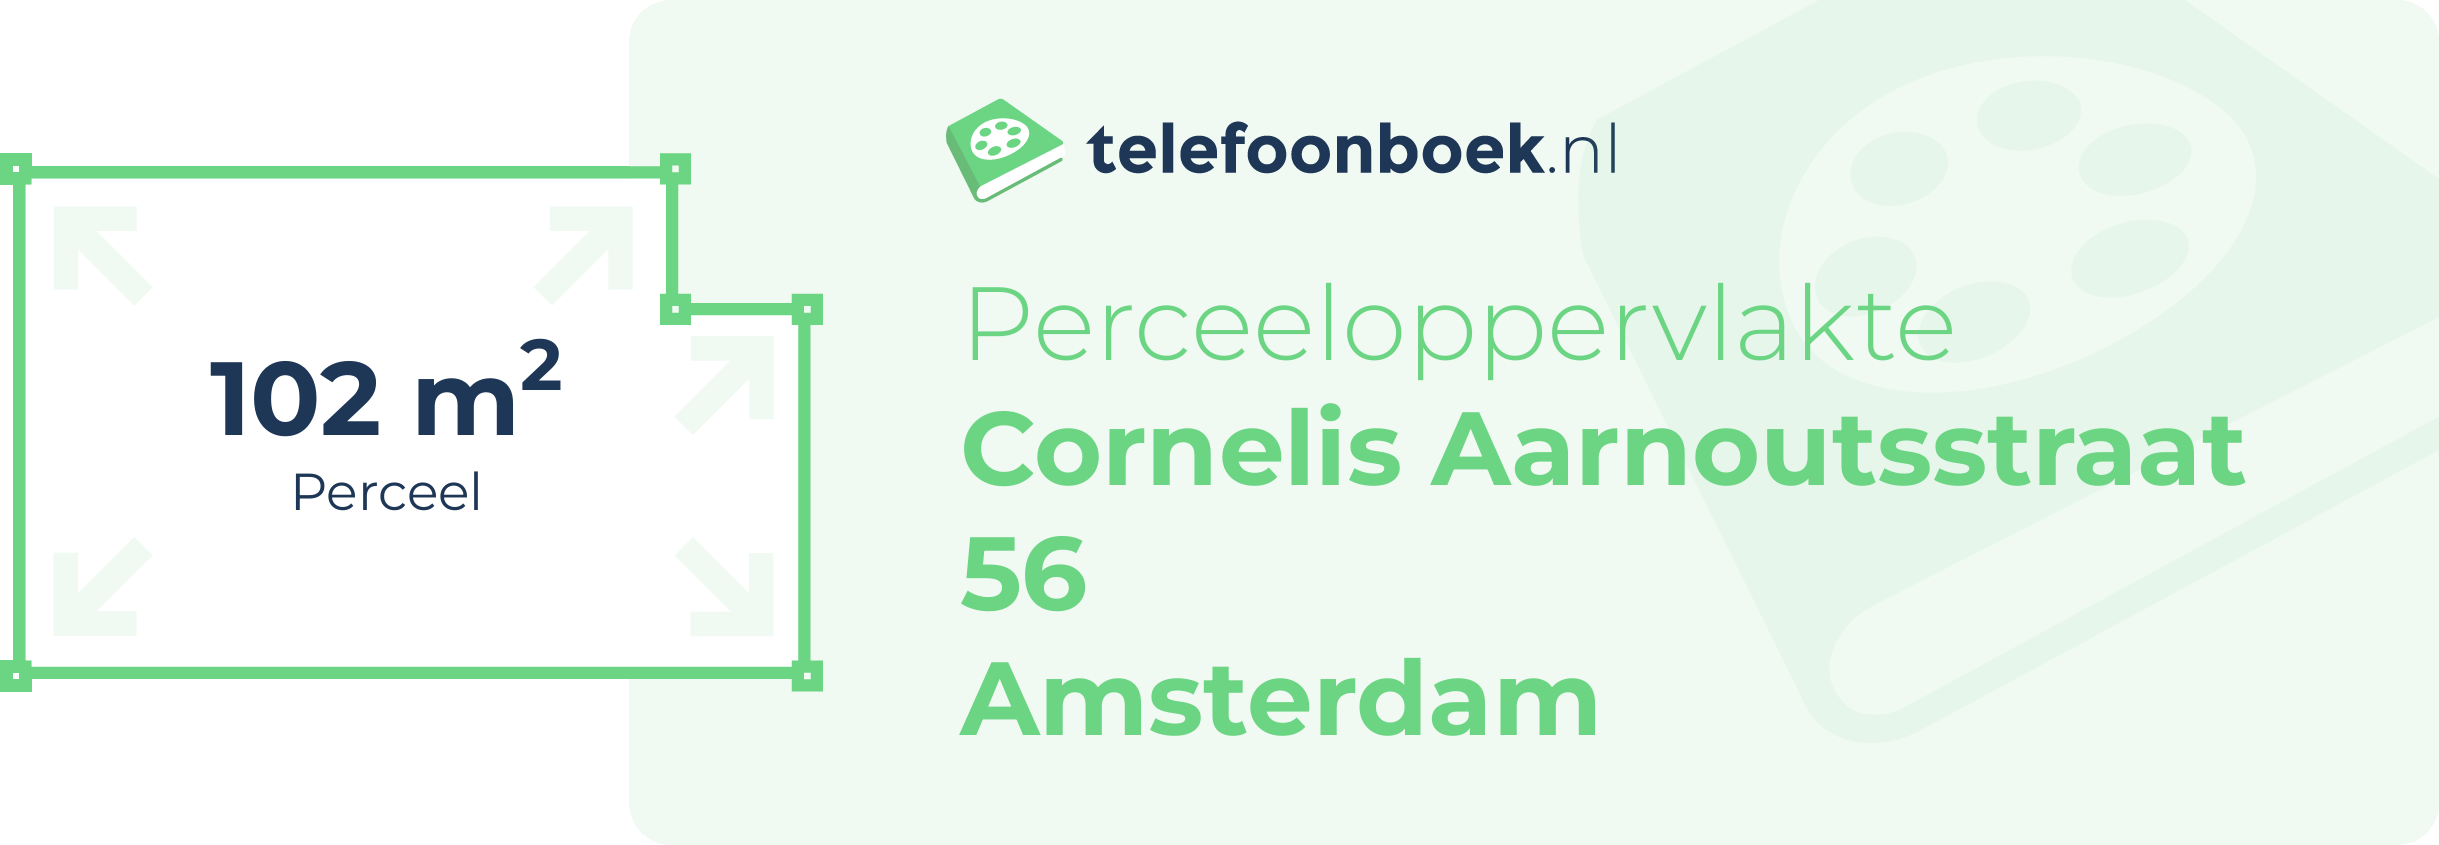 Perceeloppervlakte Cornelis Aarnoutsstraat 56 Amsterdam